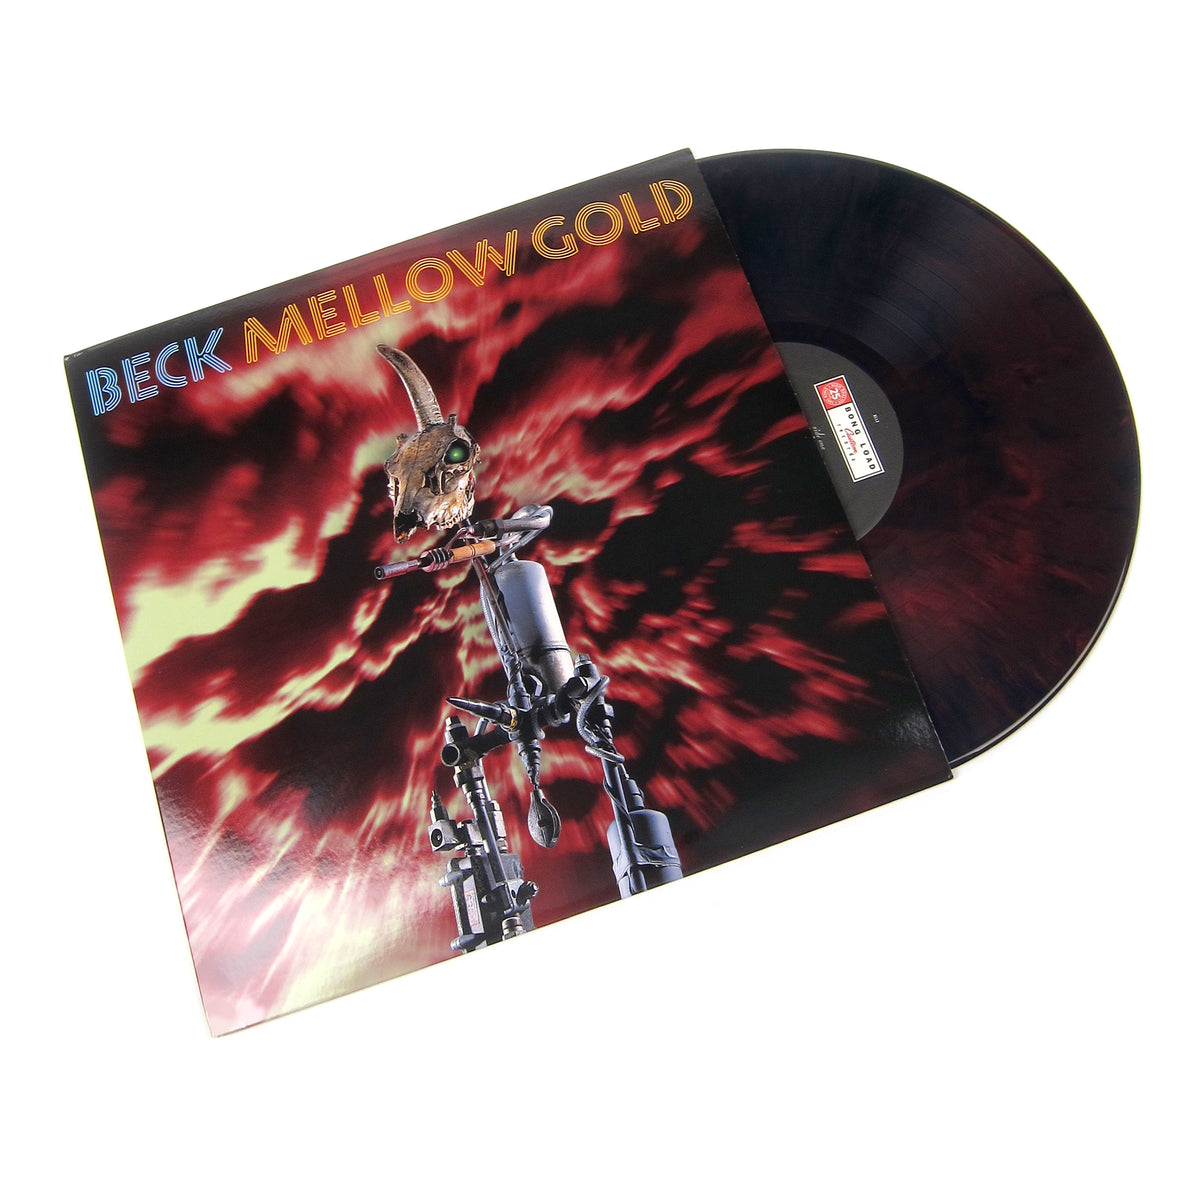 Beck: Mellow Gold (Bong Load 25th Anniversary, 180g Colored Vinyl) Vinyl LP